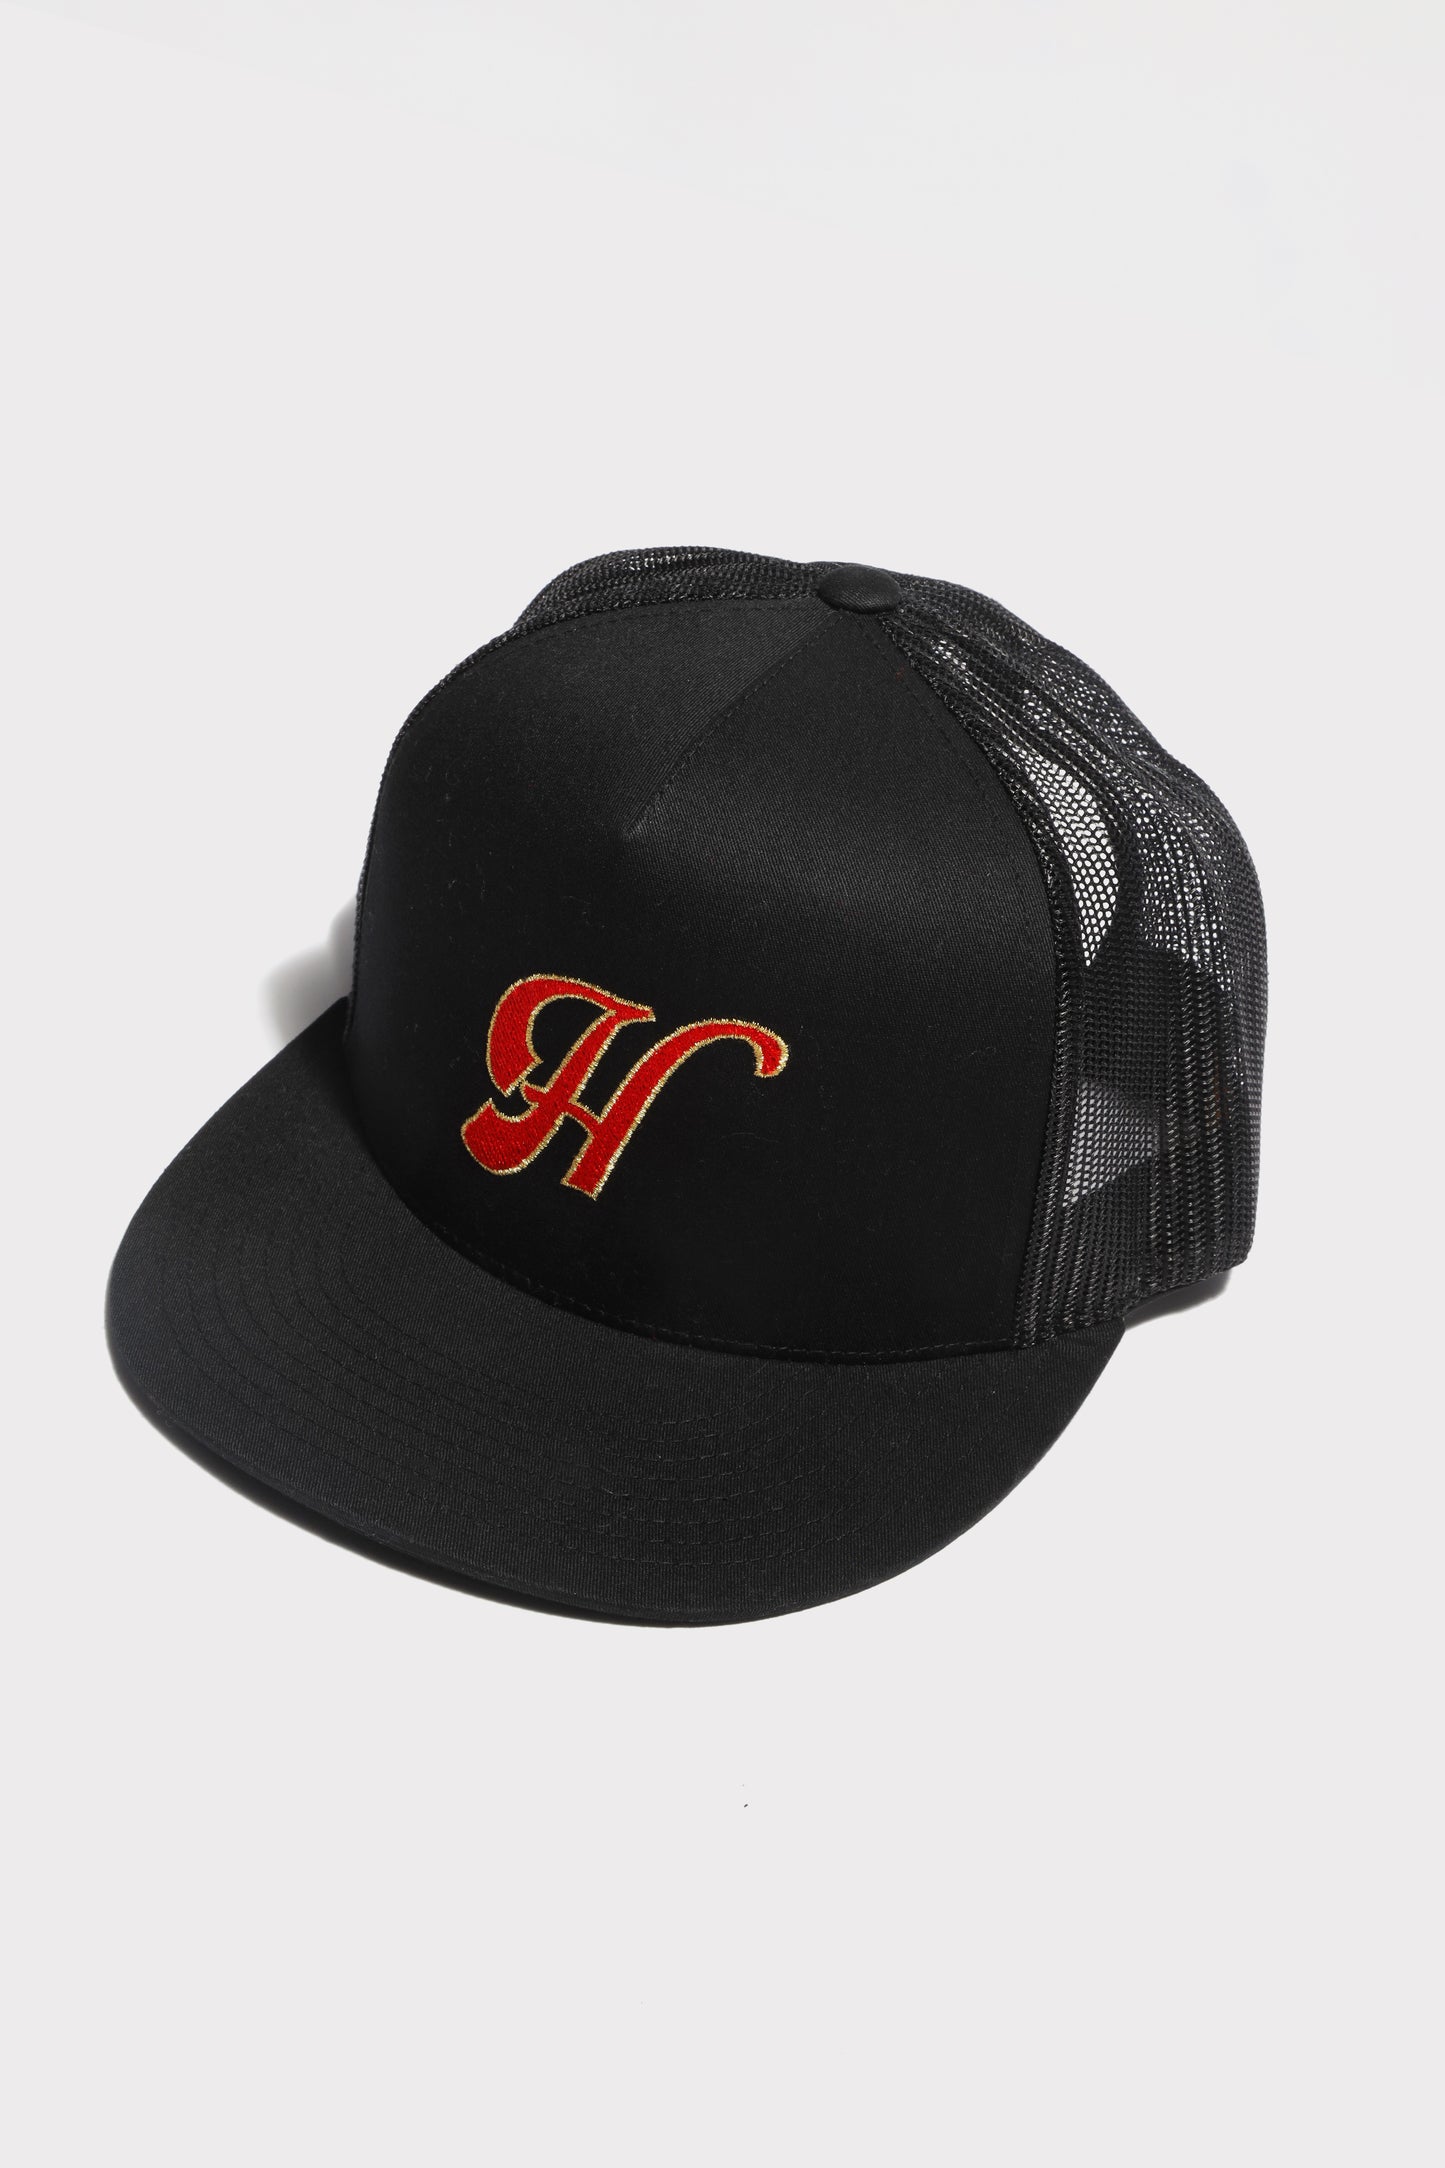 Trucker "H" Hat (Black)